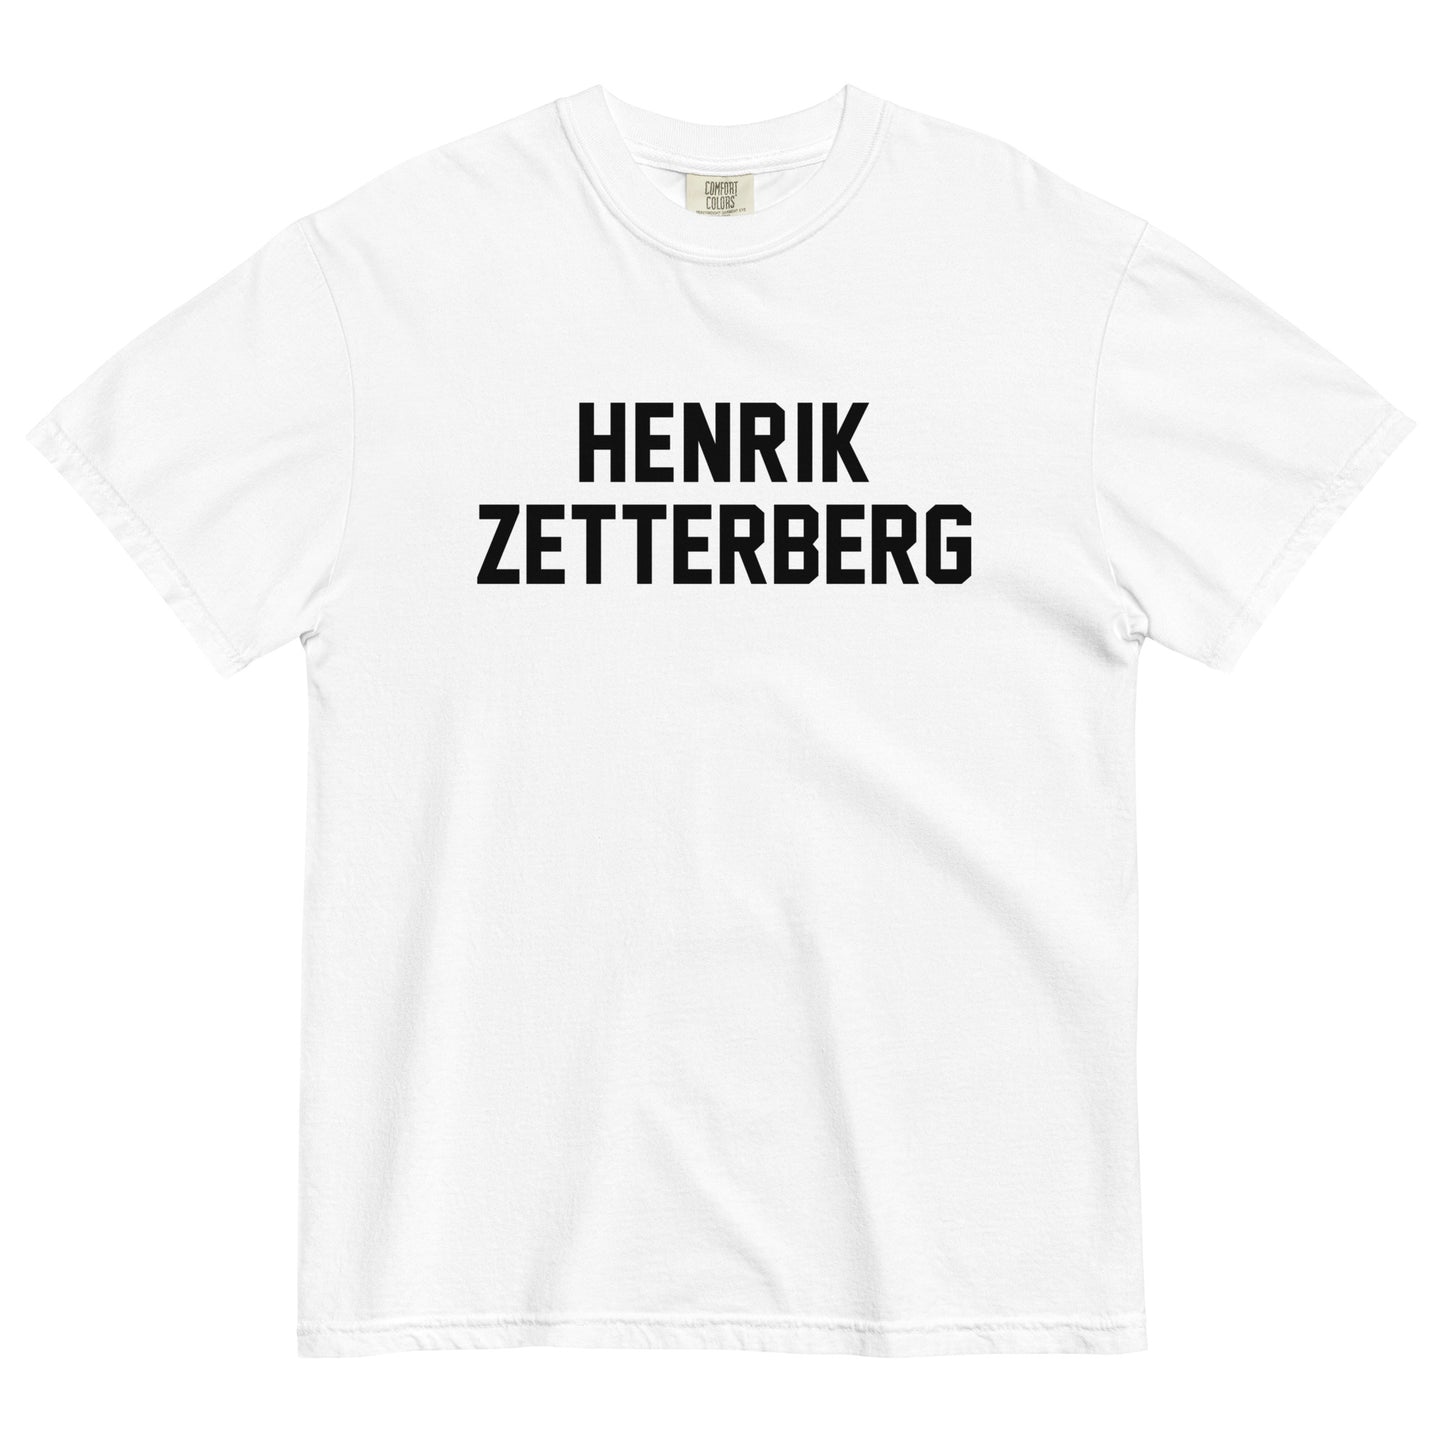 HENRIK ZETTERBERG